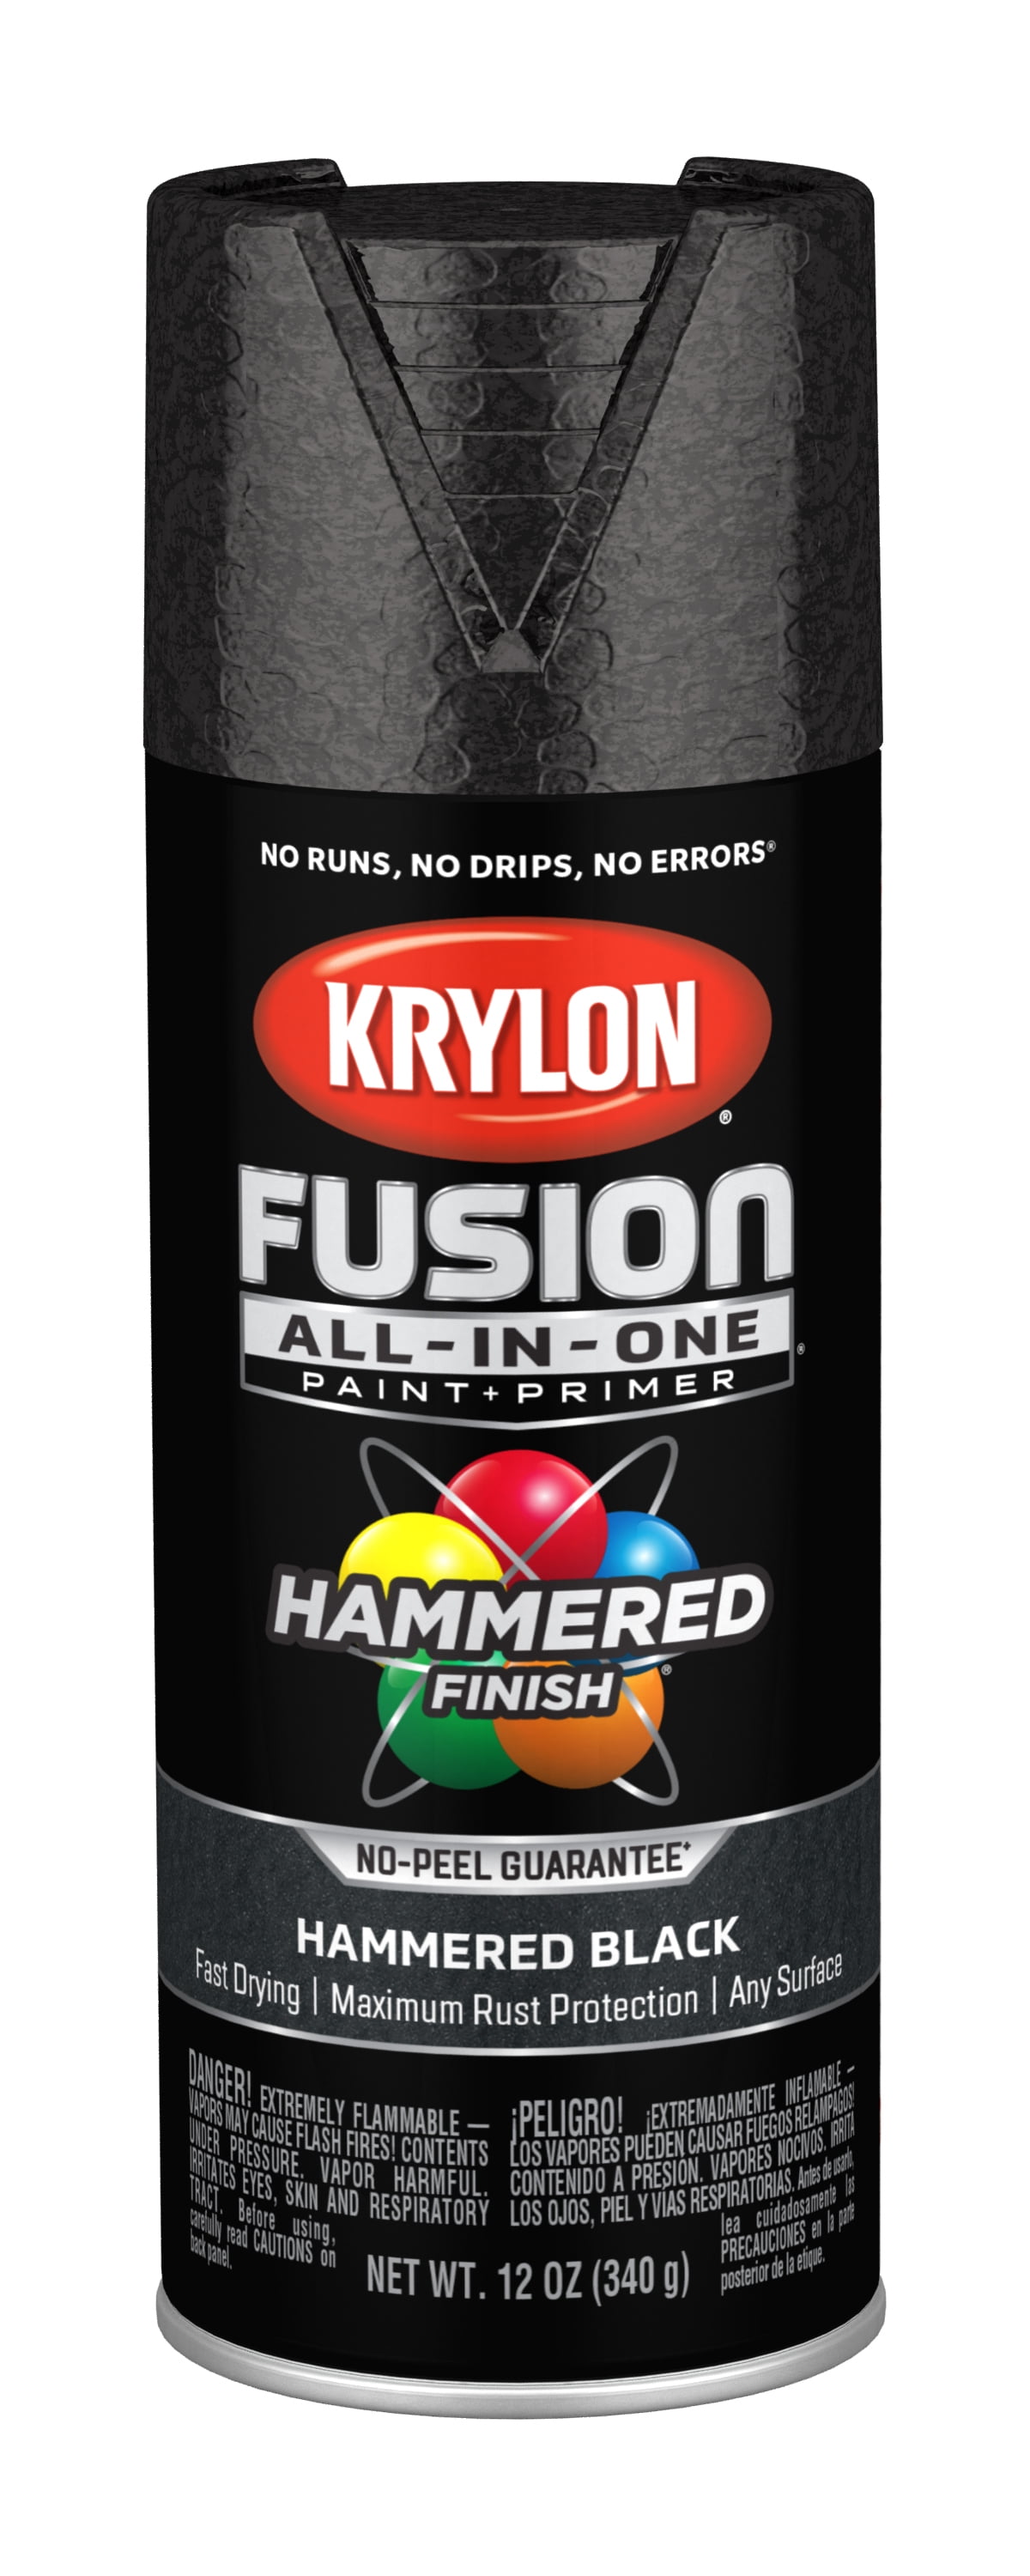 Krylon Now Spray Paint I21211007, Matte Black, 16 oz